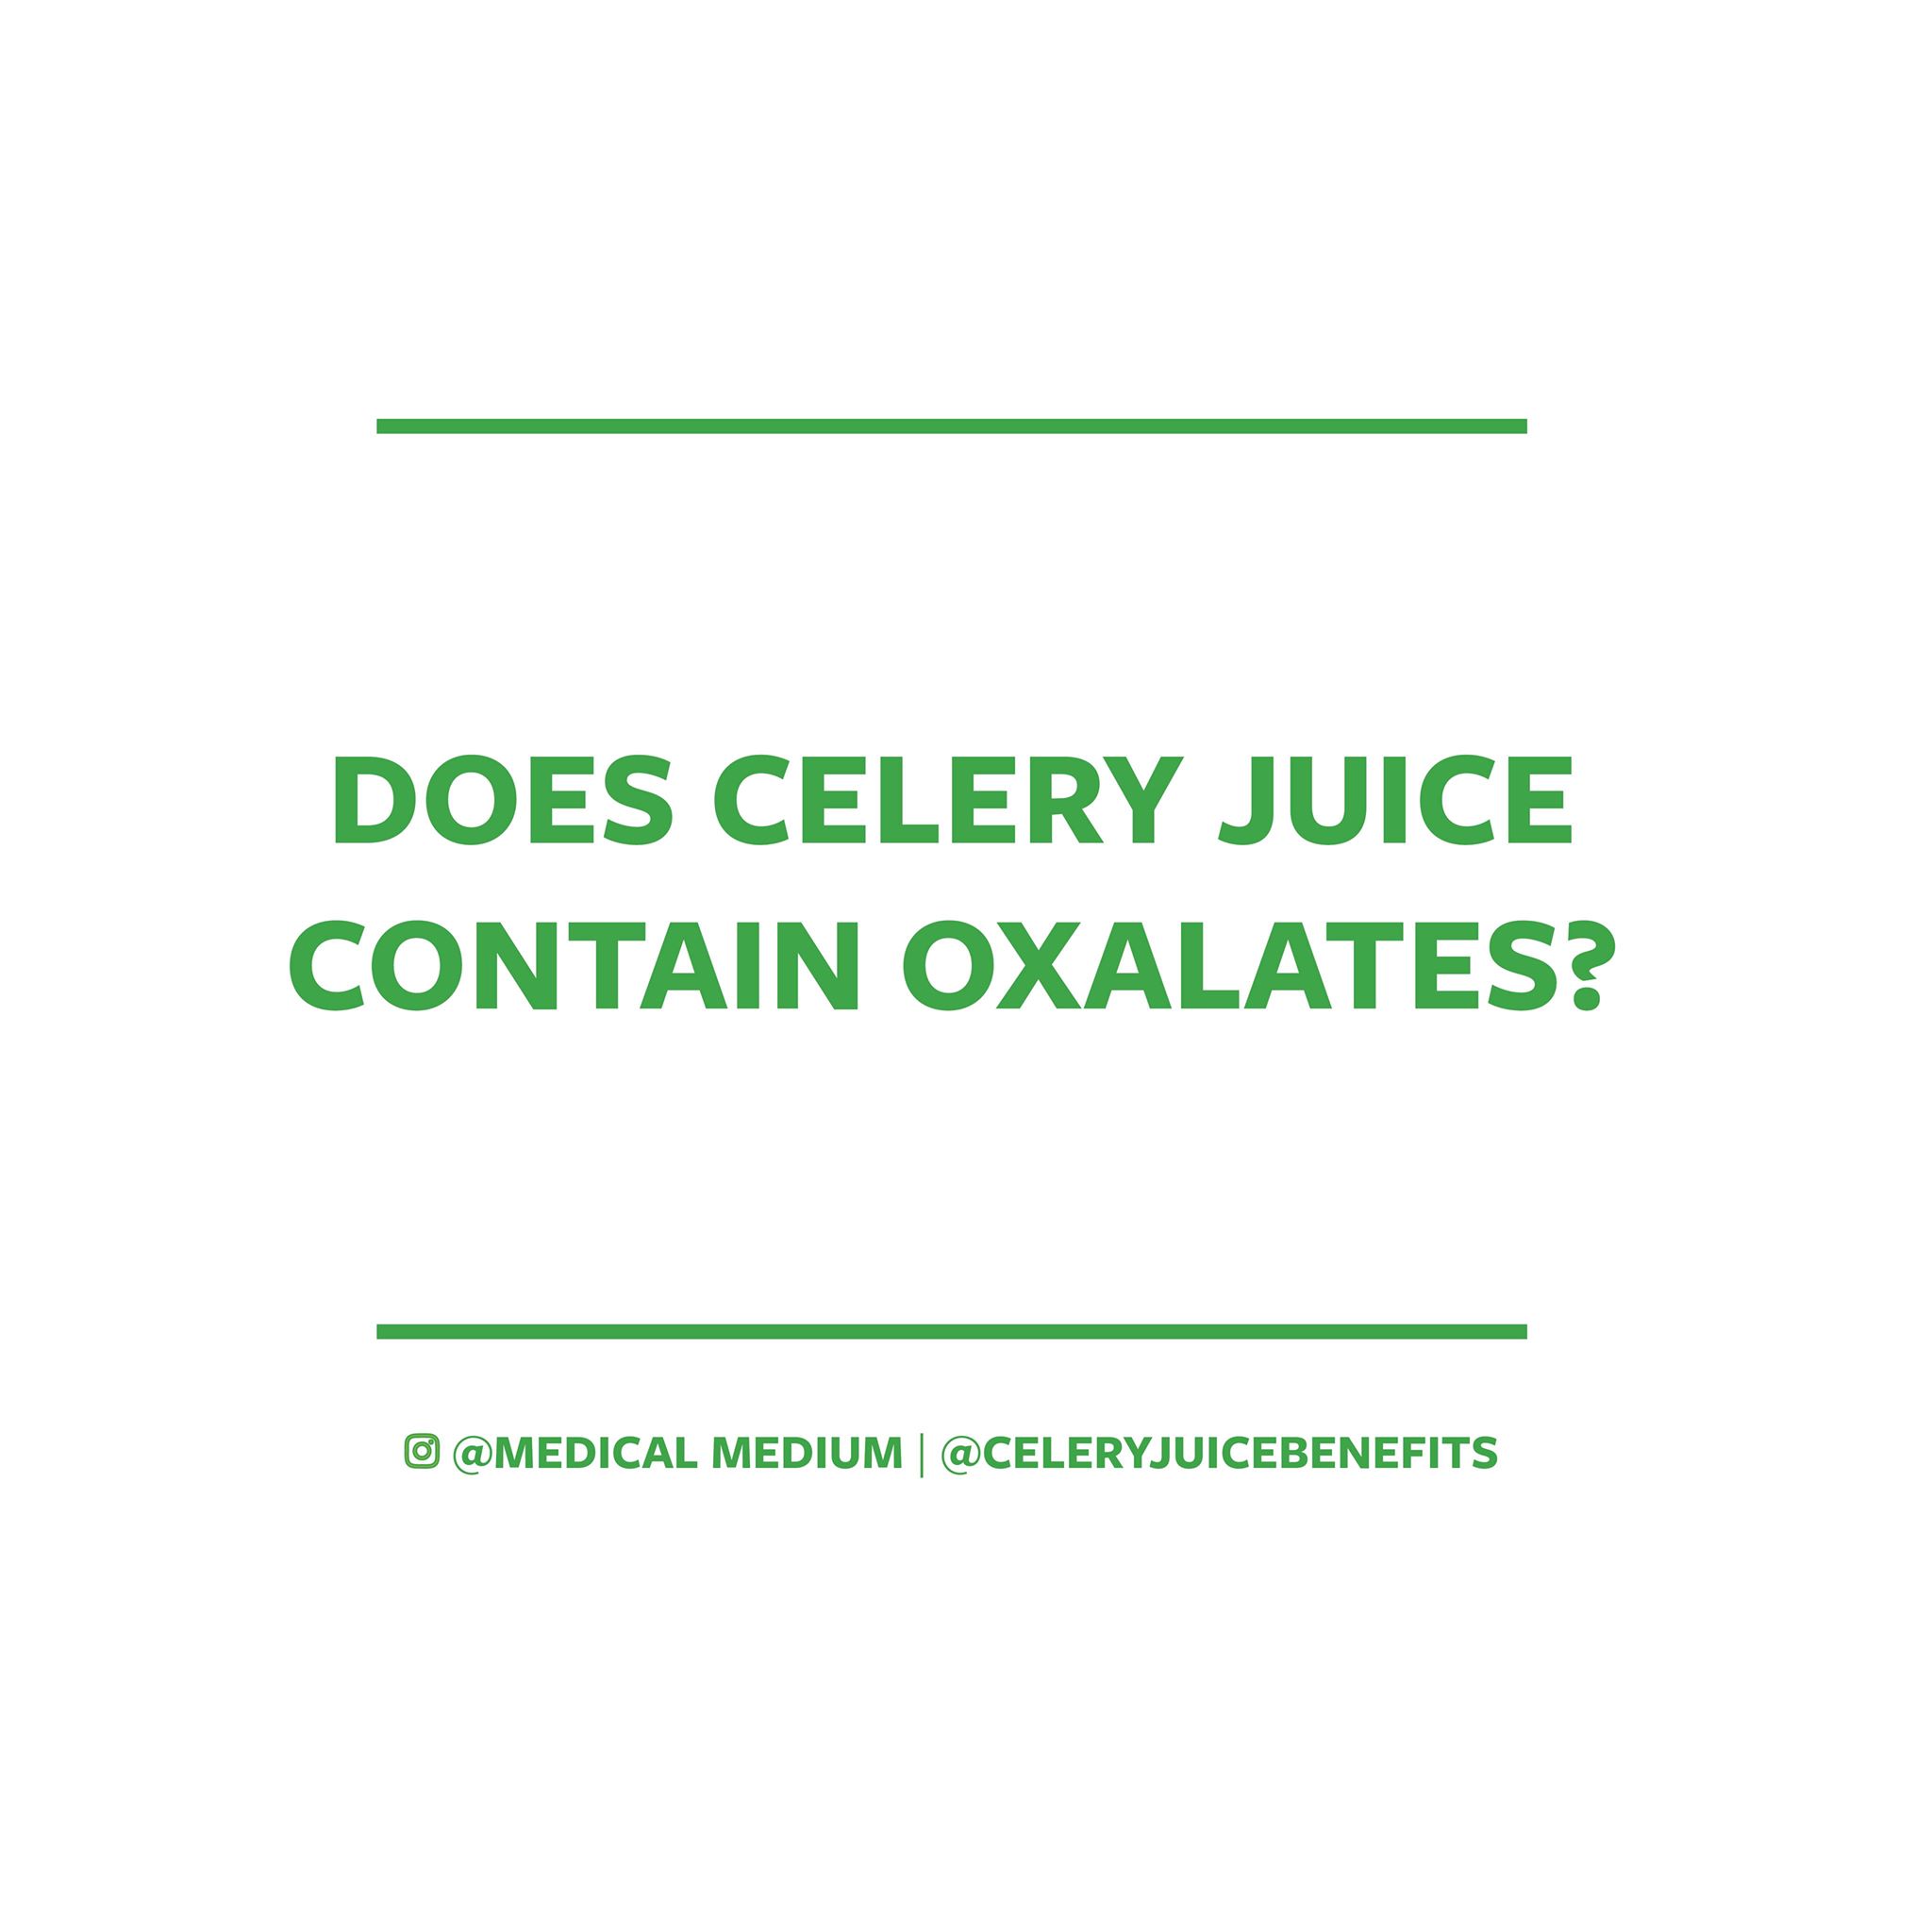 Does celery juice contain oxalates?